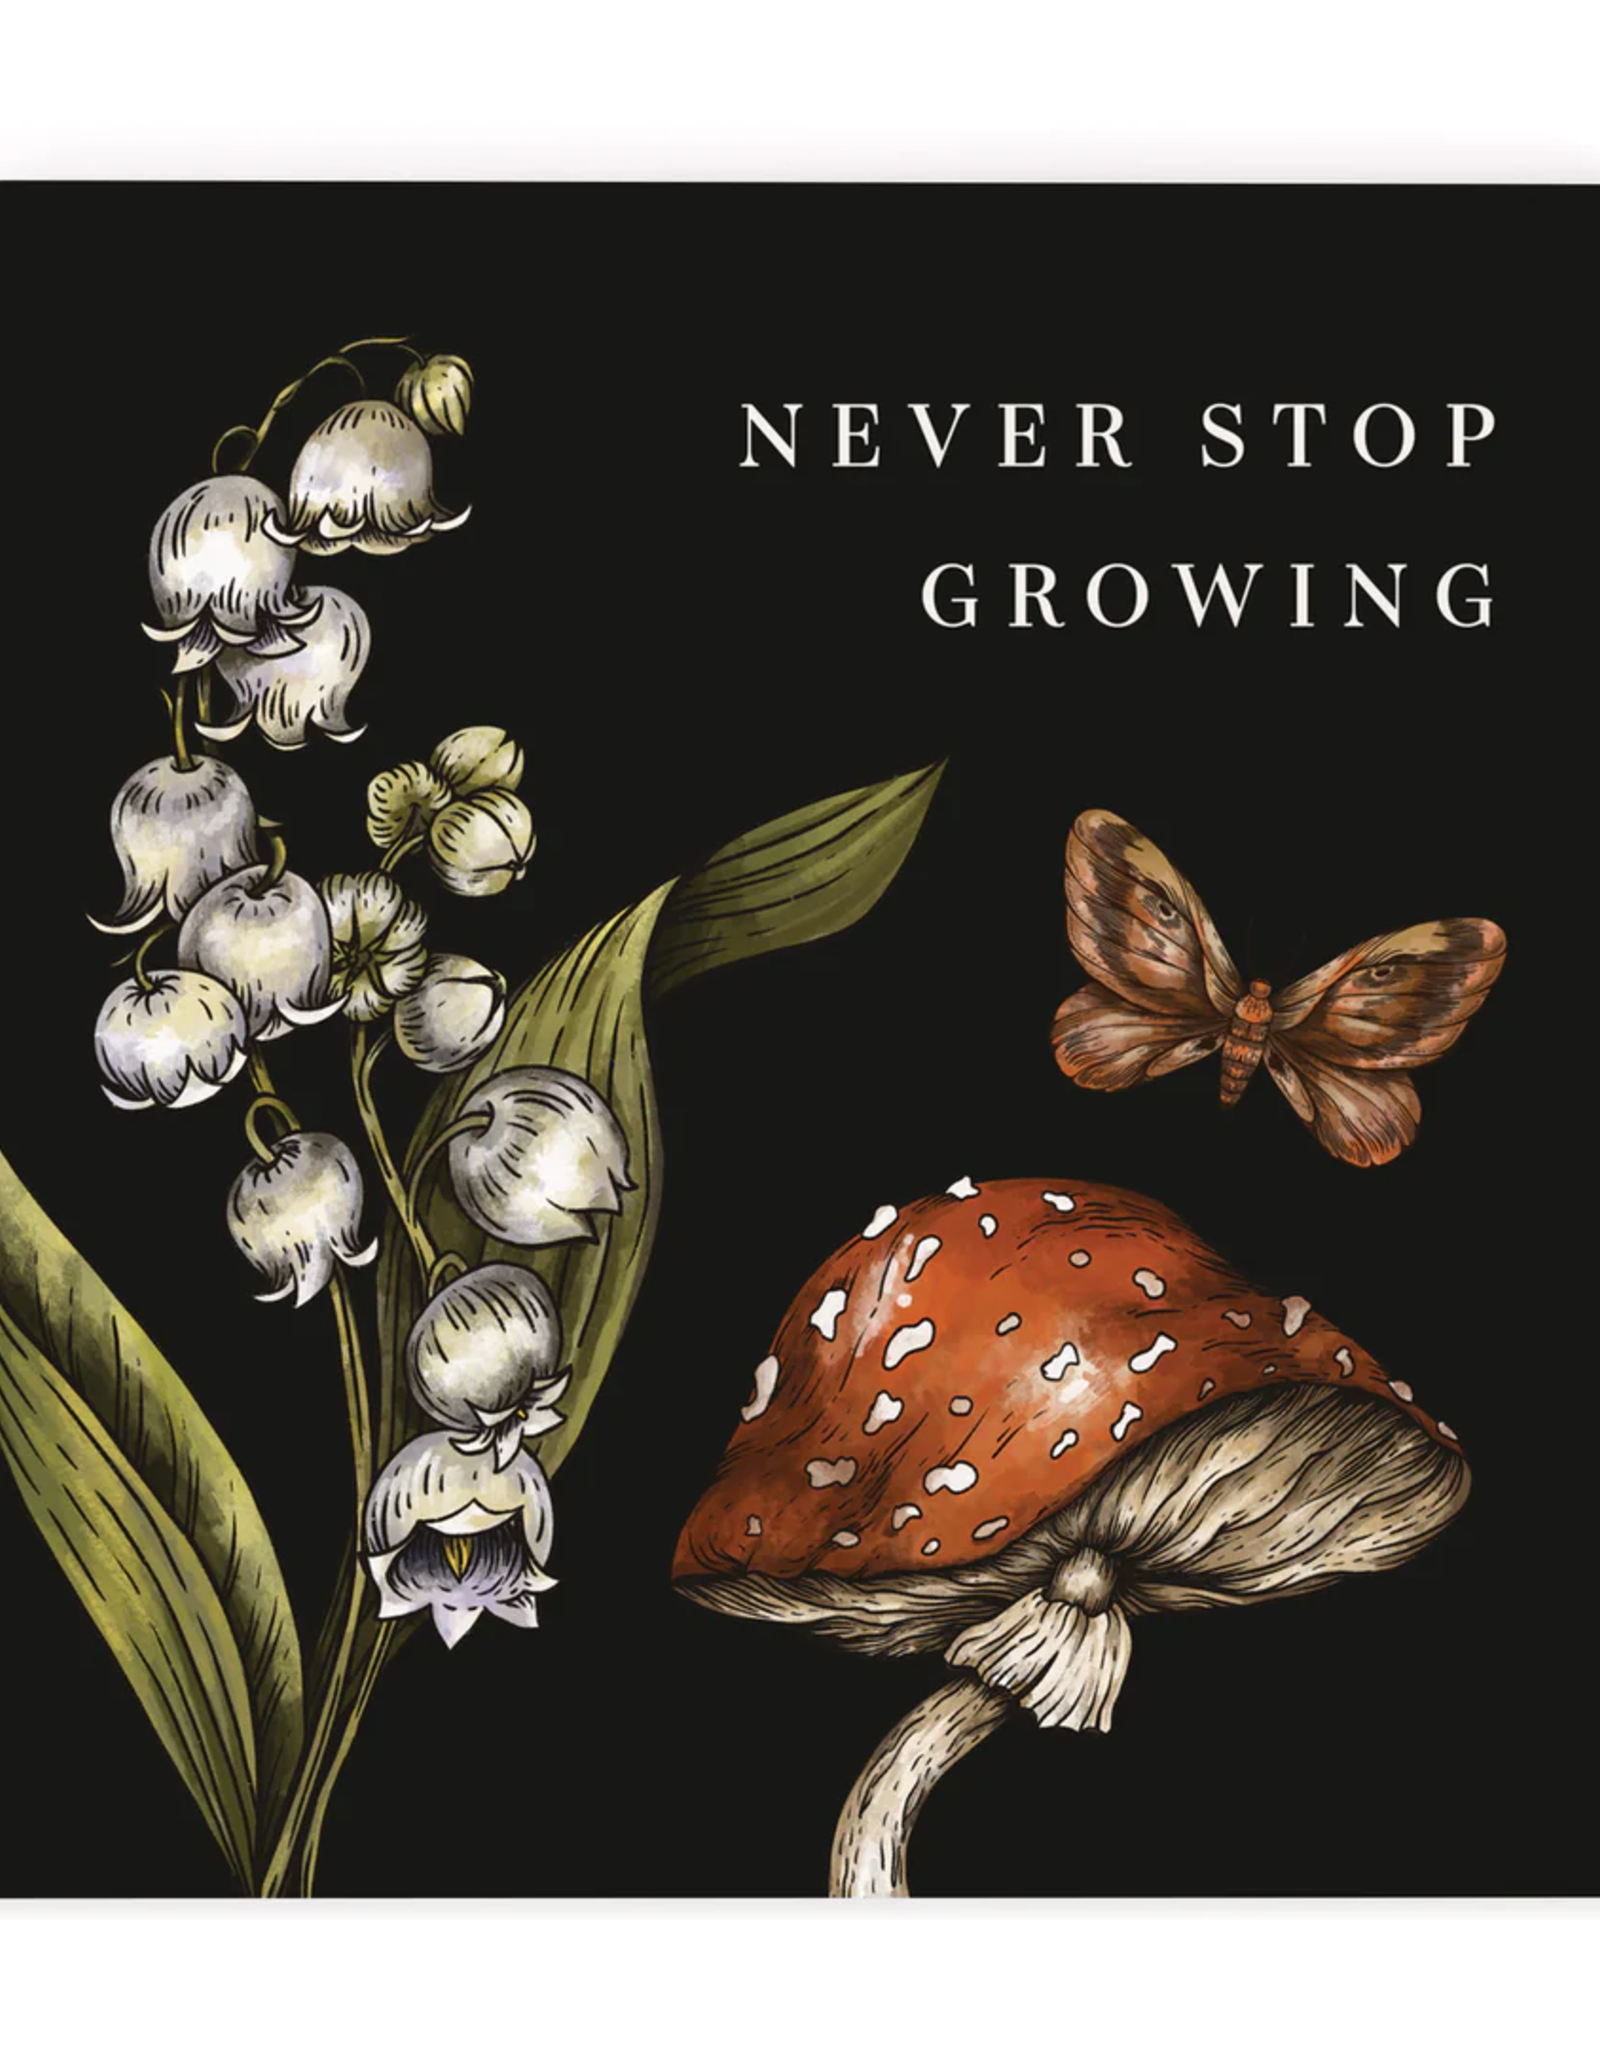 Coaster-Ceramic-Never Stop Growing